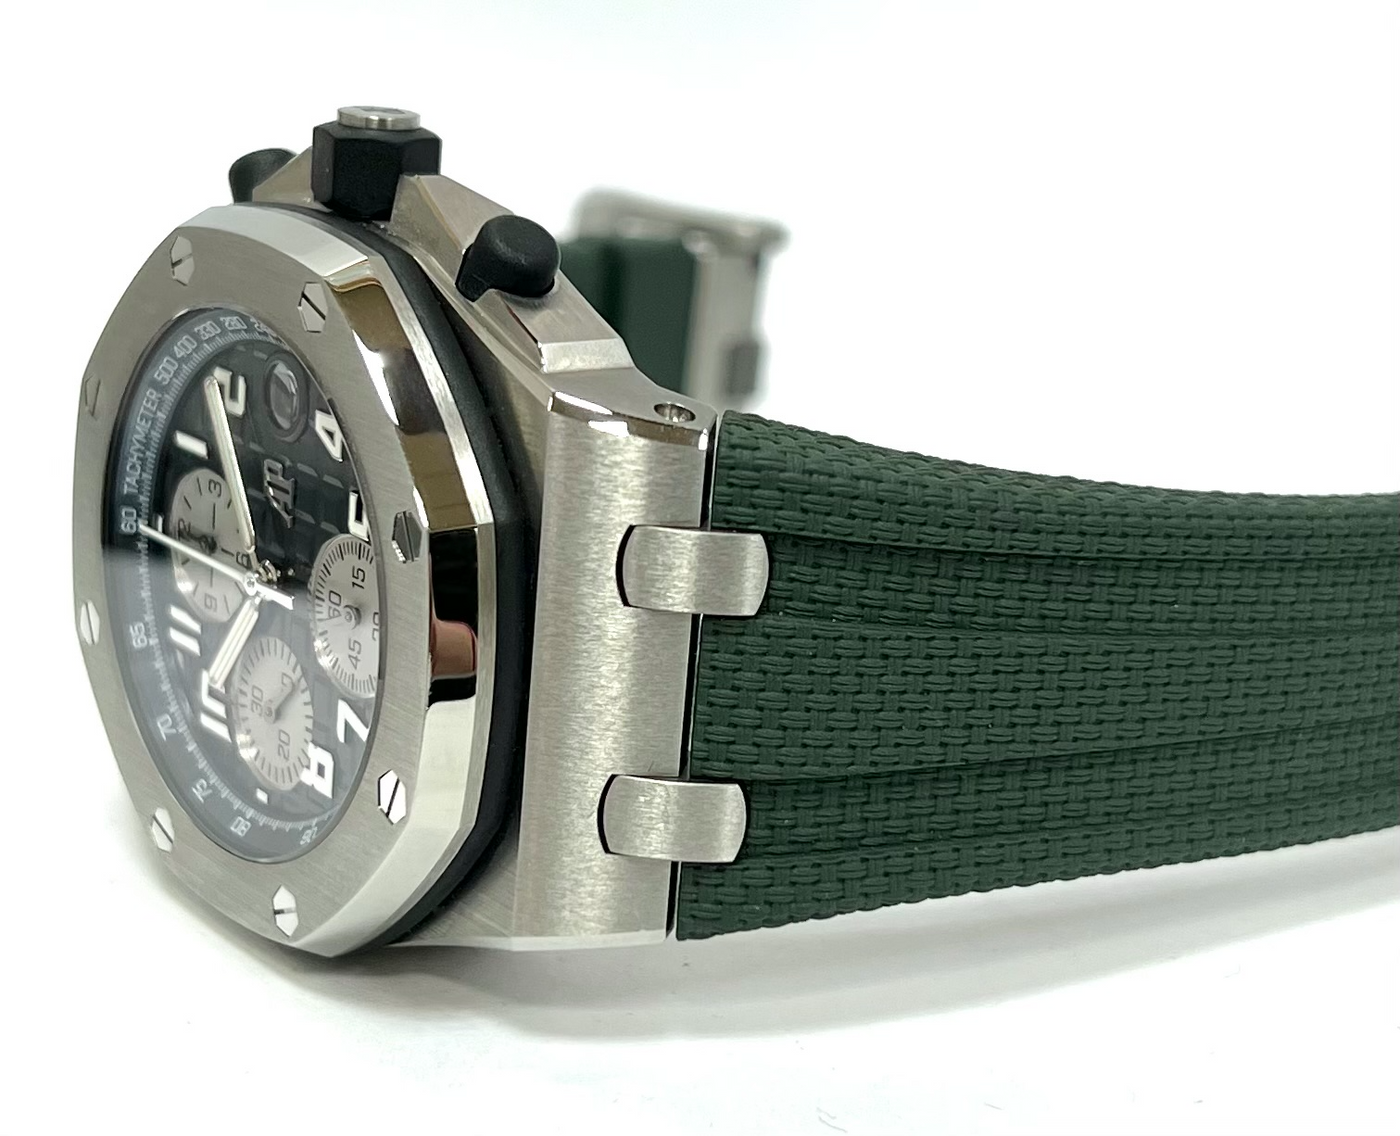 Audemars Piguet Royal Oak Offshore Chronograph Titanium 42mm Green Dial